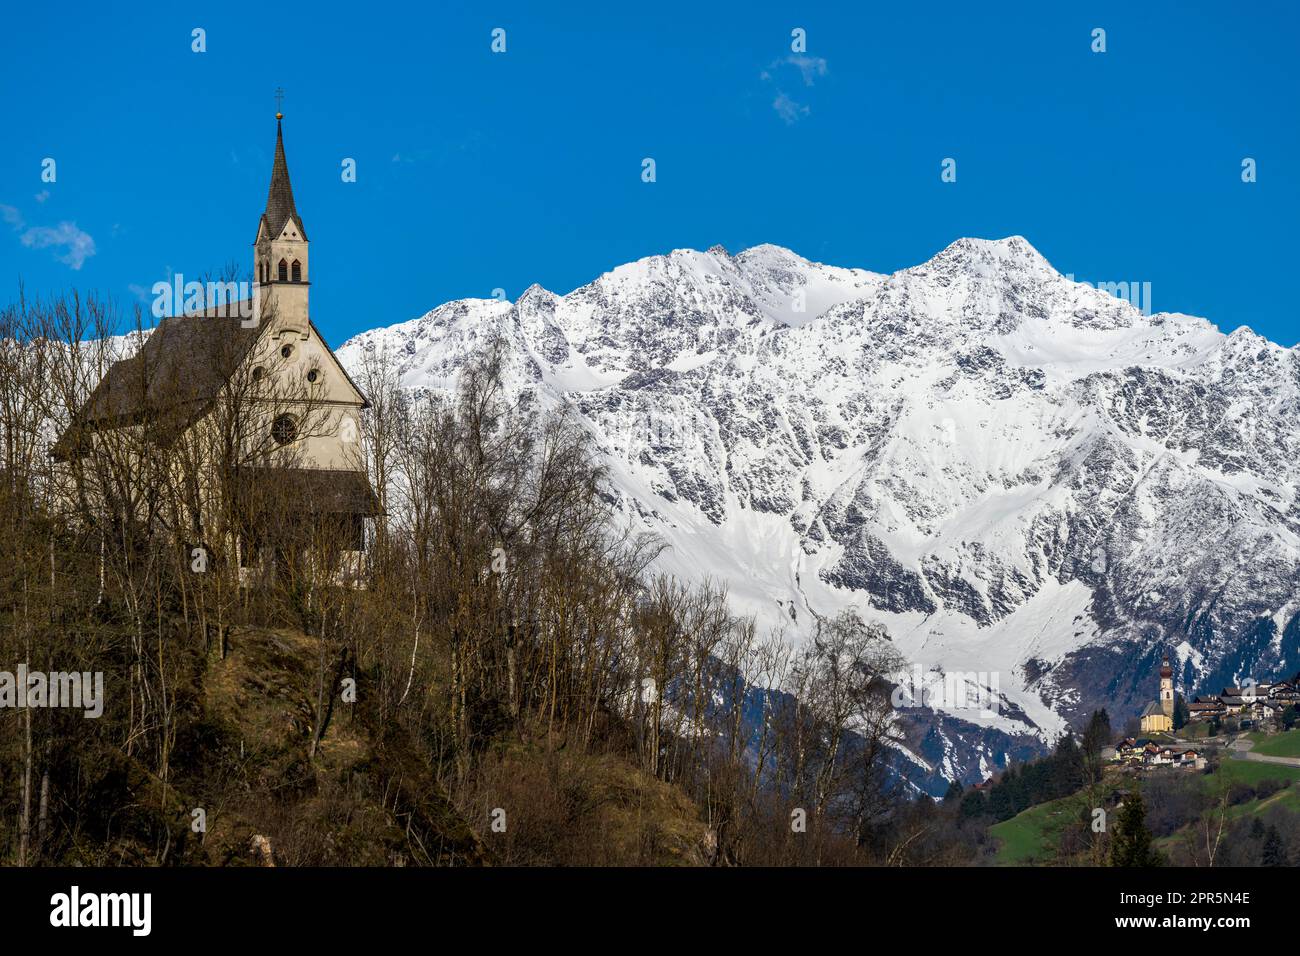 Small alpine church with the snowy Stubai Alps in the background, Freienfeld-Campo di Trens, Trentino-Alto Adige/Sudtirol, Italy Stock Photo